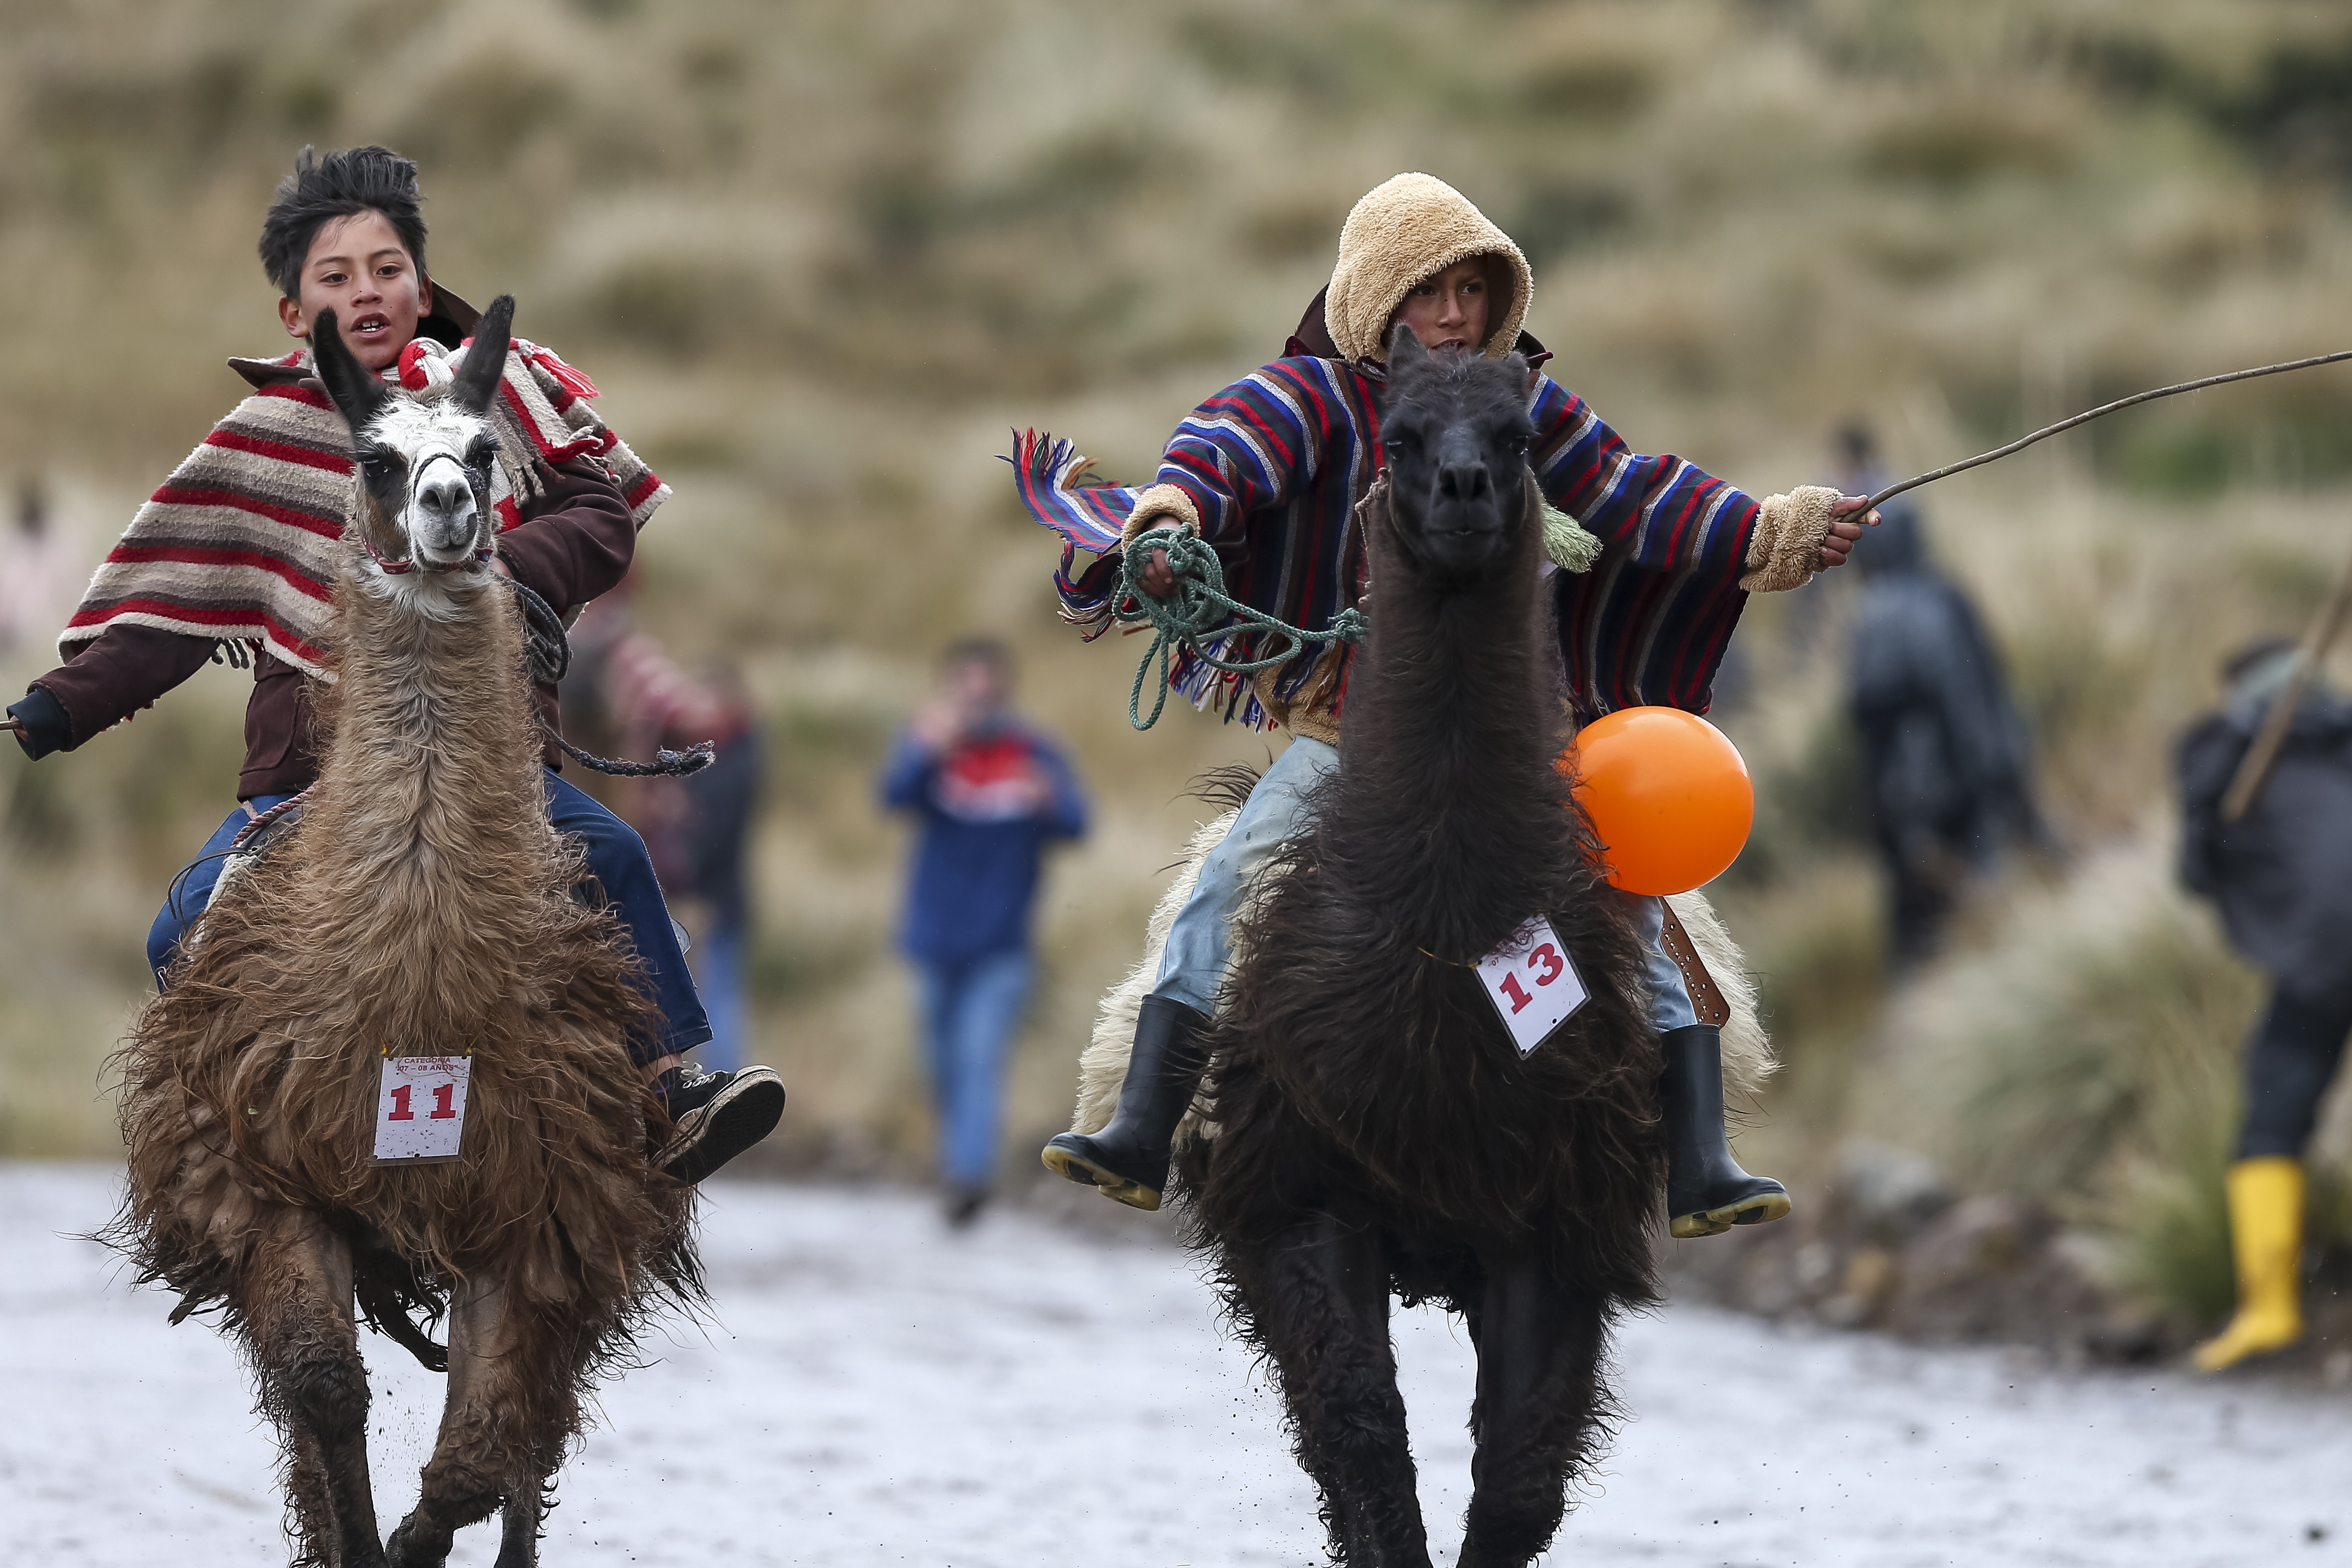 AP Photos: Kids race llamas in Ecuador's highlands